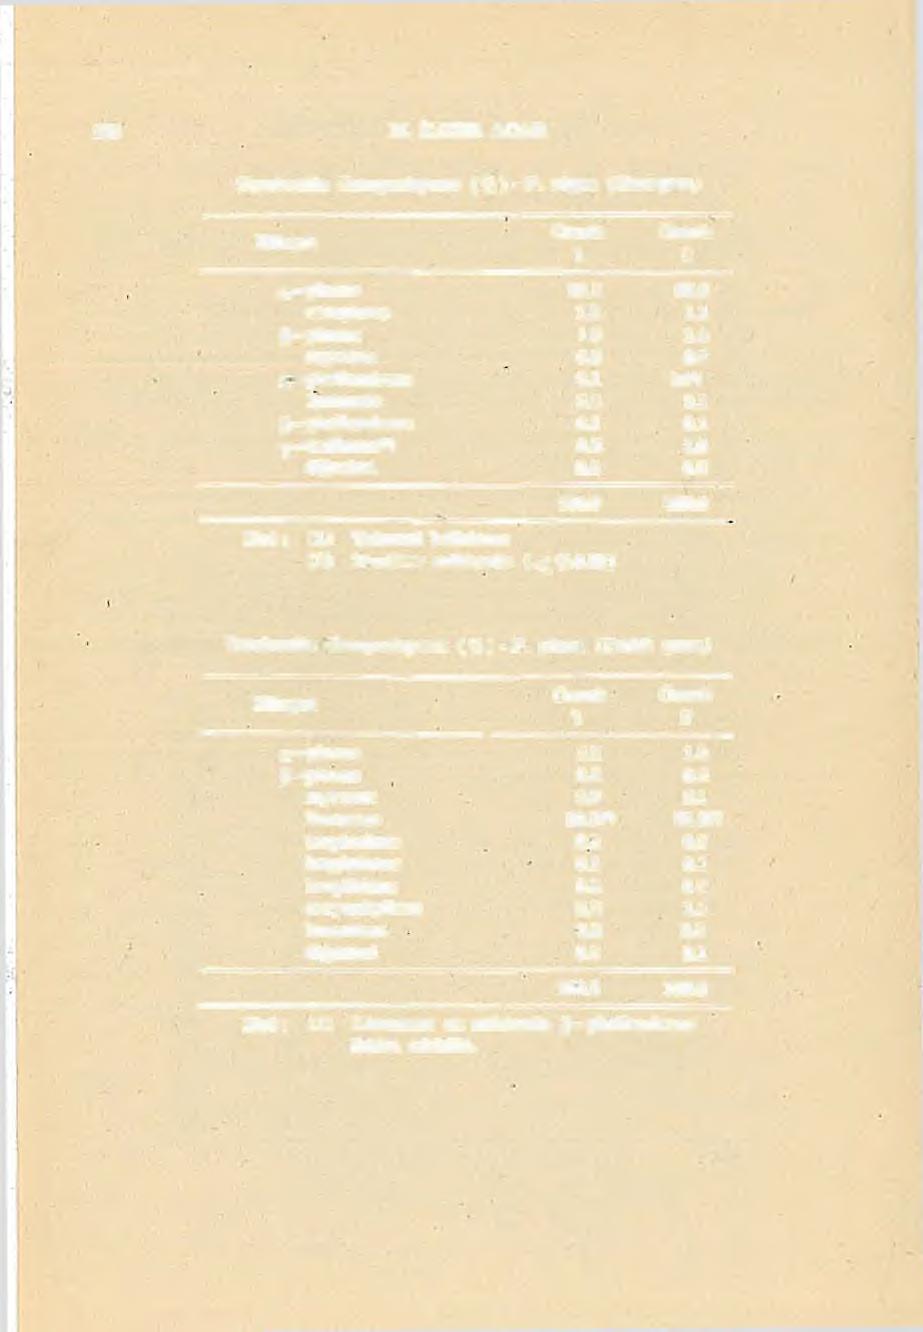 202 M. İLK ER ACAR ' T erebentin Kompozisyonu (% ) - P. nigpra (Karaçam,) Bileşen 1 2,a pinene 92.2 92.